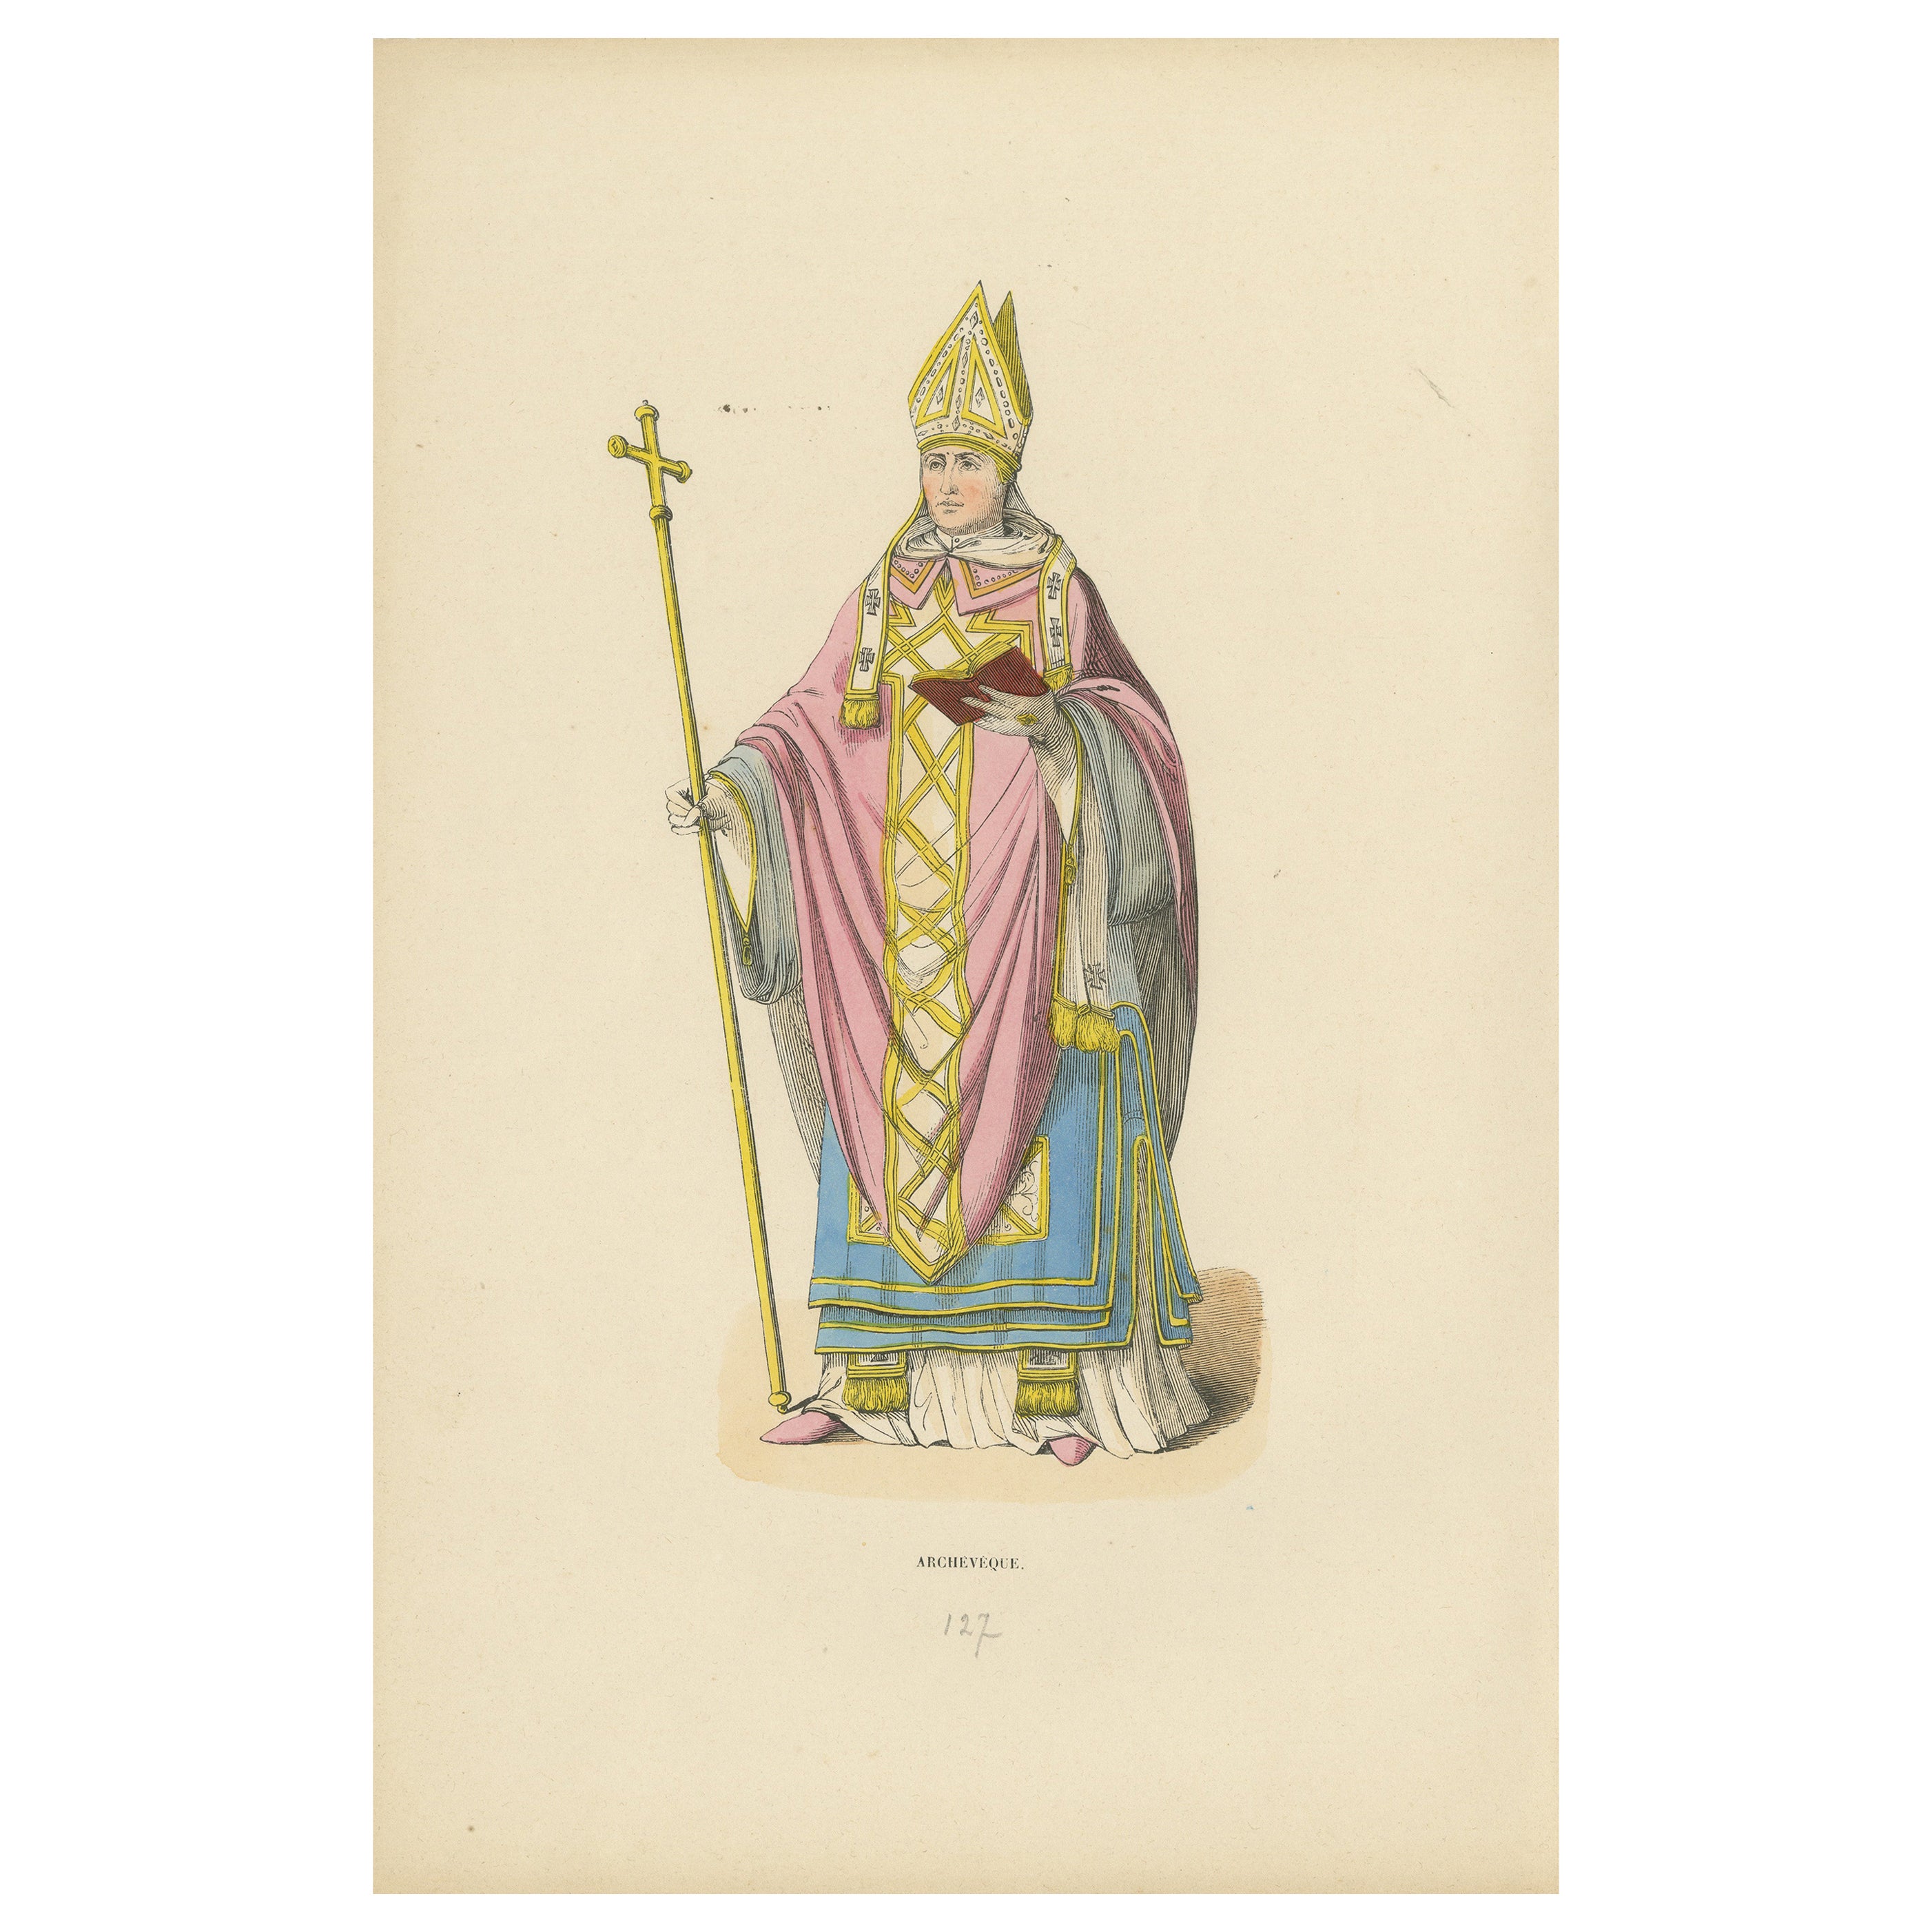 Ecclesiastical Splendor: The Archbishop's Regalia in a Lithograph of 1847